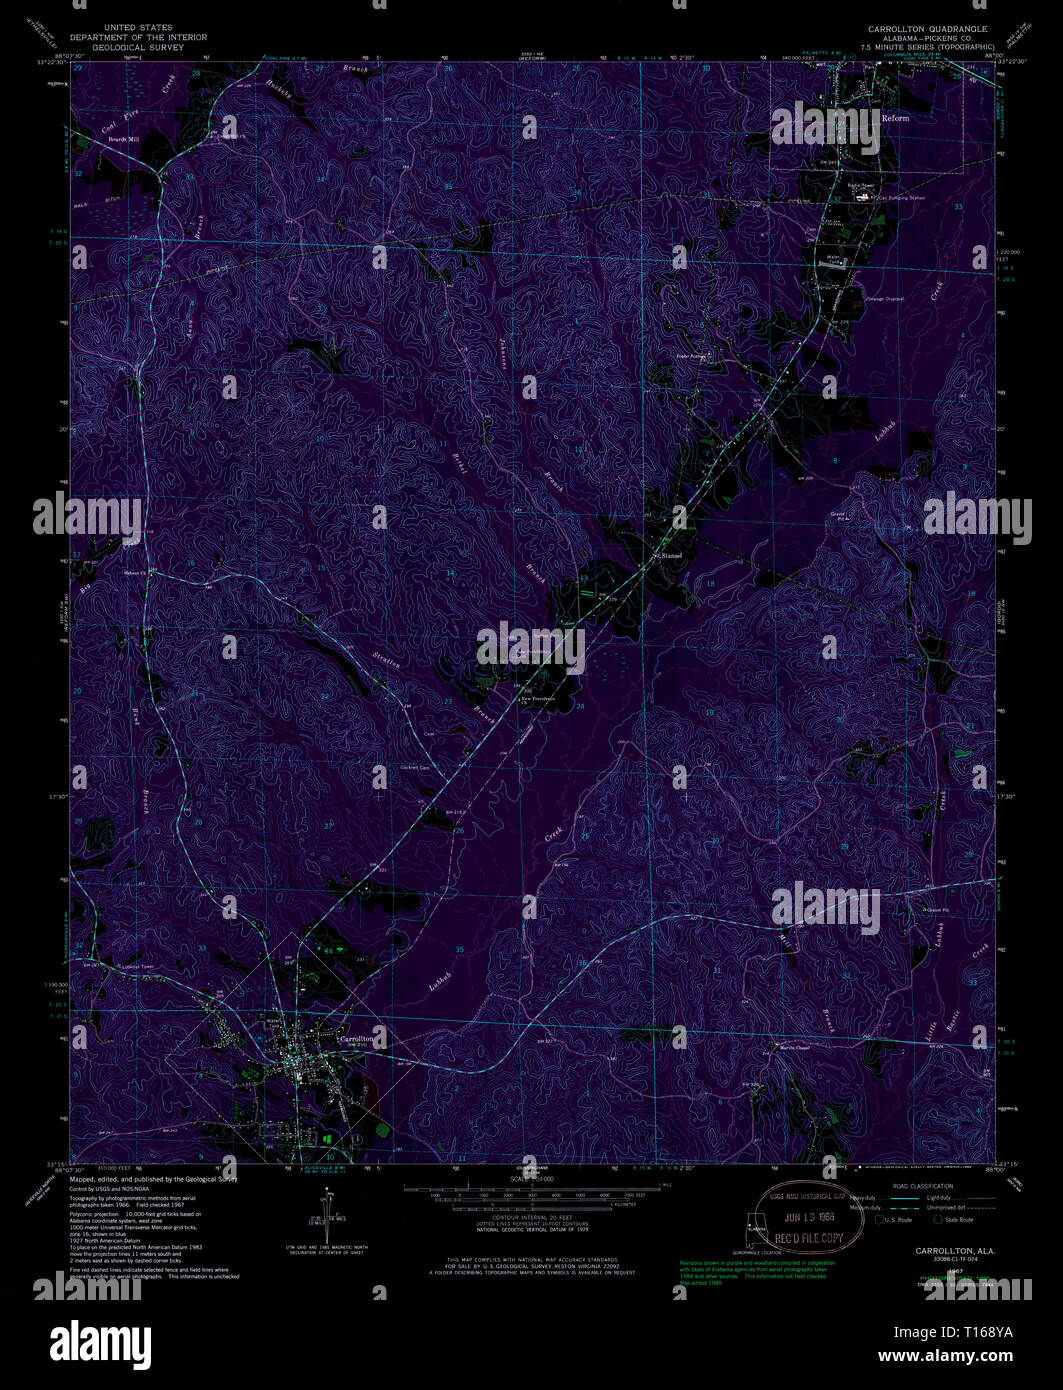 USGS TOPO Map Alabama AL Carrollton 303419 1967 24000 Inverted Stock Photo